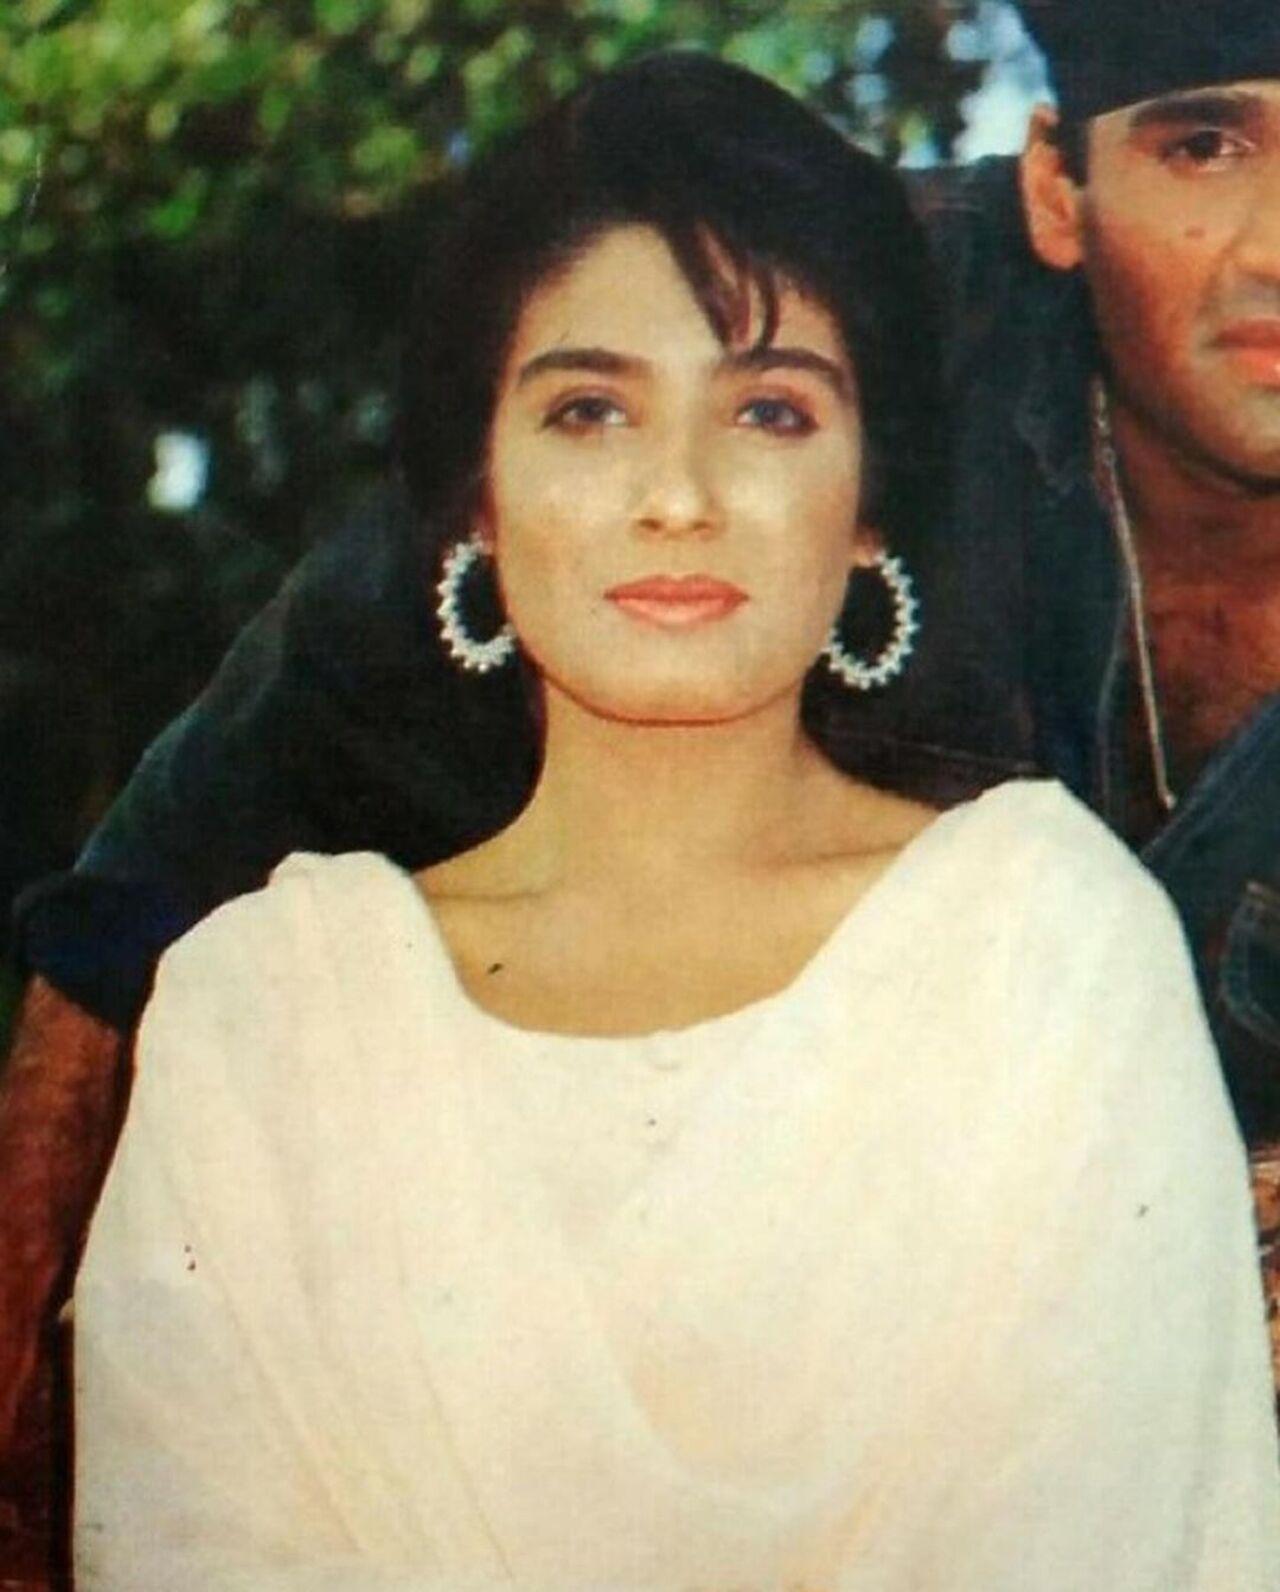 In 1993, at the age of 21, Raveena starred in films like Parampara, Pehla Nasha, and also two Telugu films- Ratha Saradhi and Bangaru Bullodu